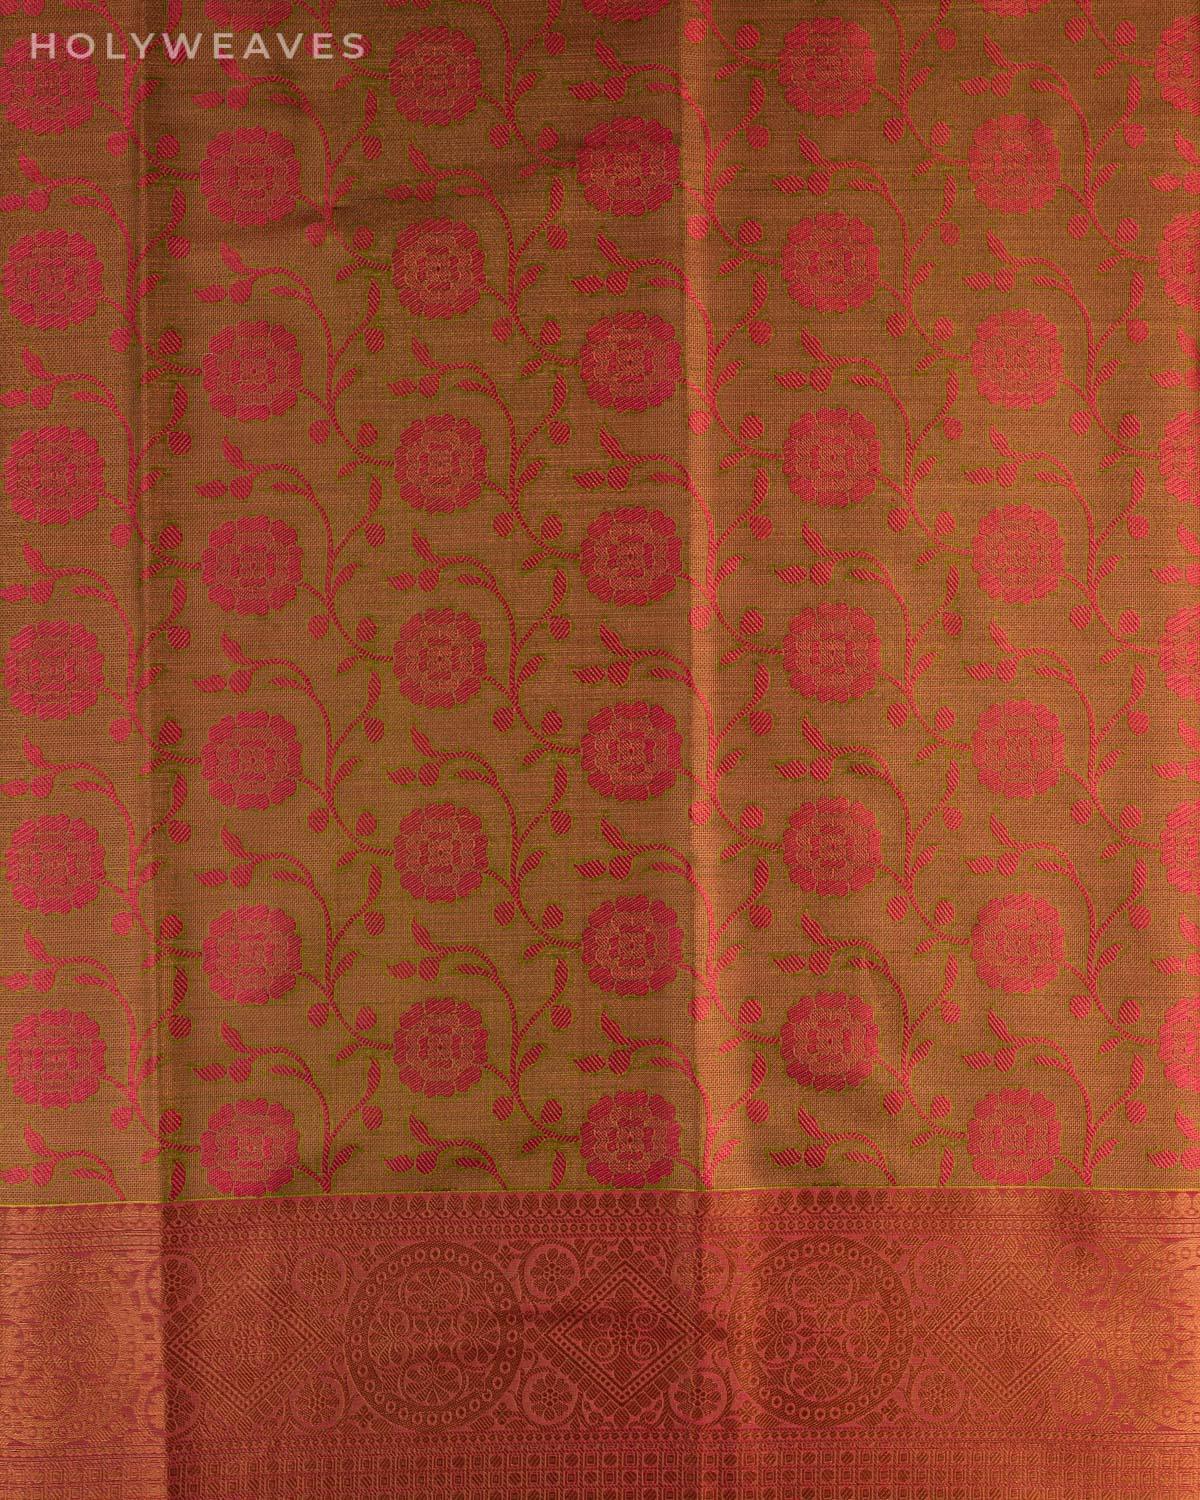 Magenta on Metallic Green Banarasi Tanchoi Brocade Woven Art Cotton Tissue Saree with Meena Bel Border - By HolyWeaves, Benares